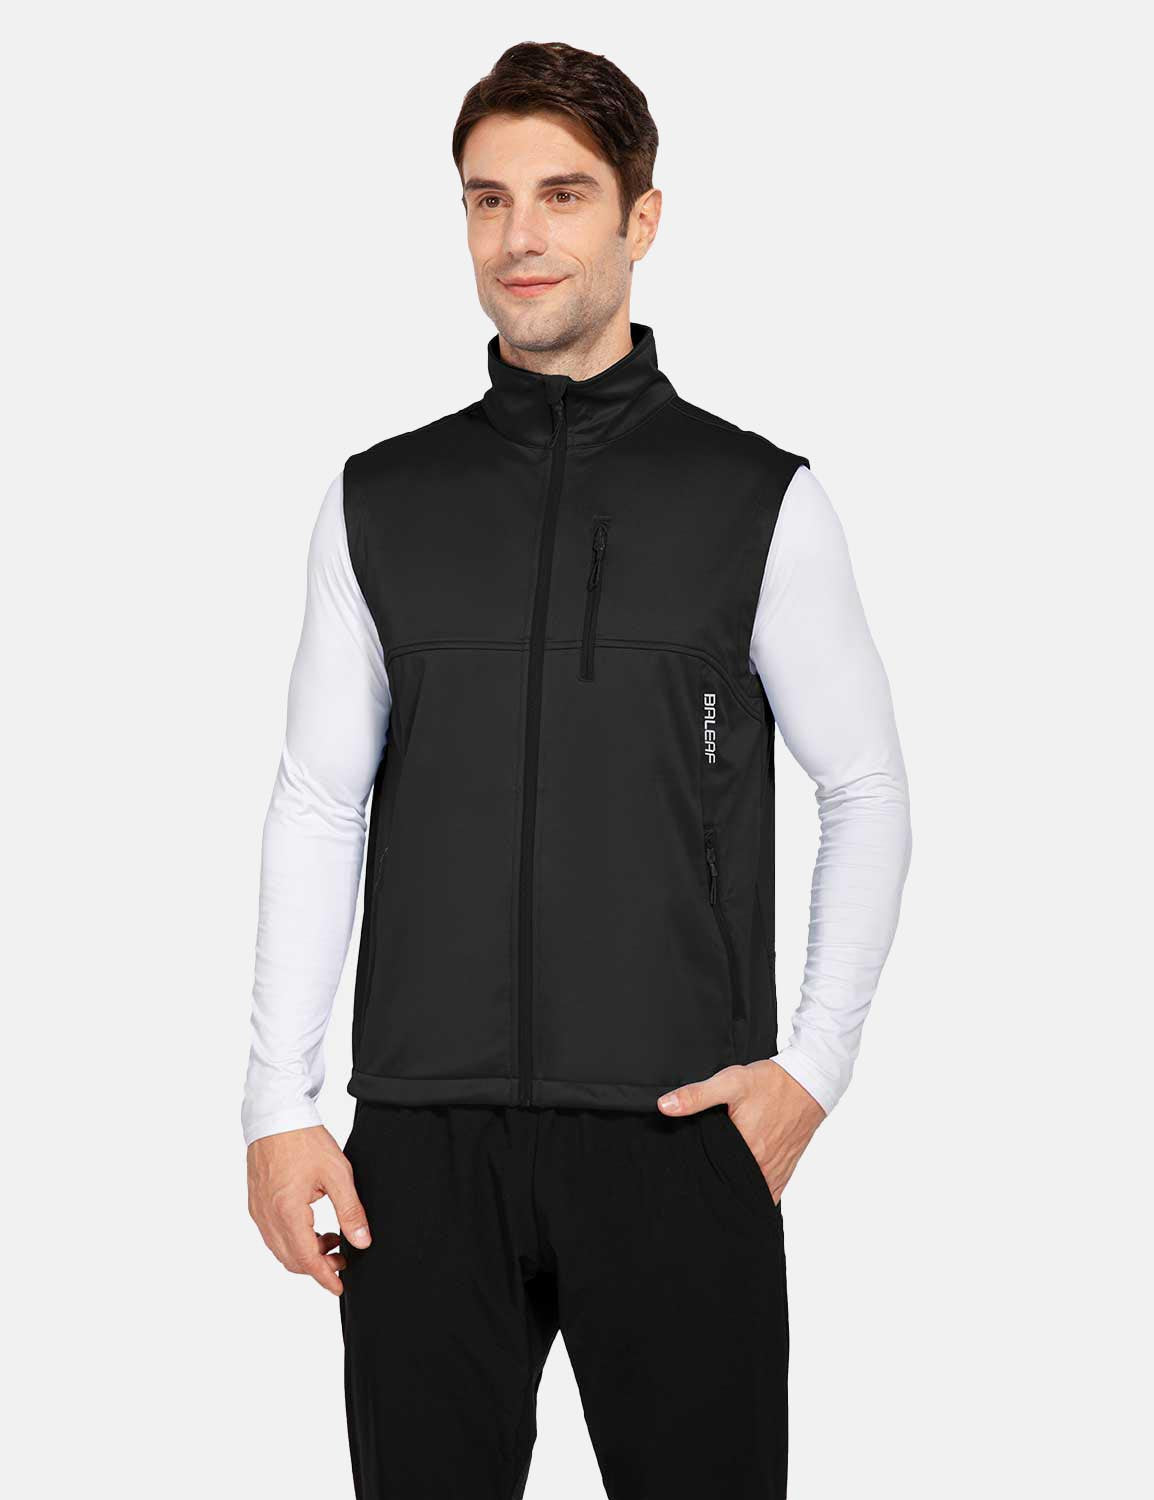 Baleaf Men's Lightweight Wind & Waterproof Pocketed Outdoor Vest aga100 Black Main